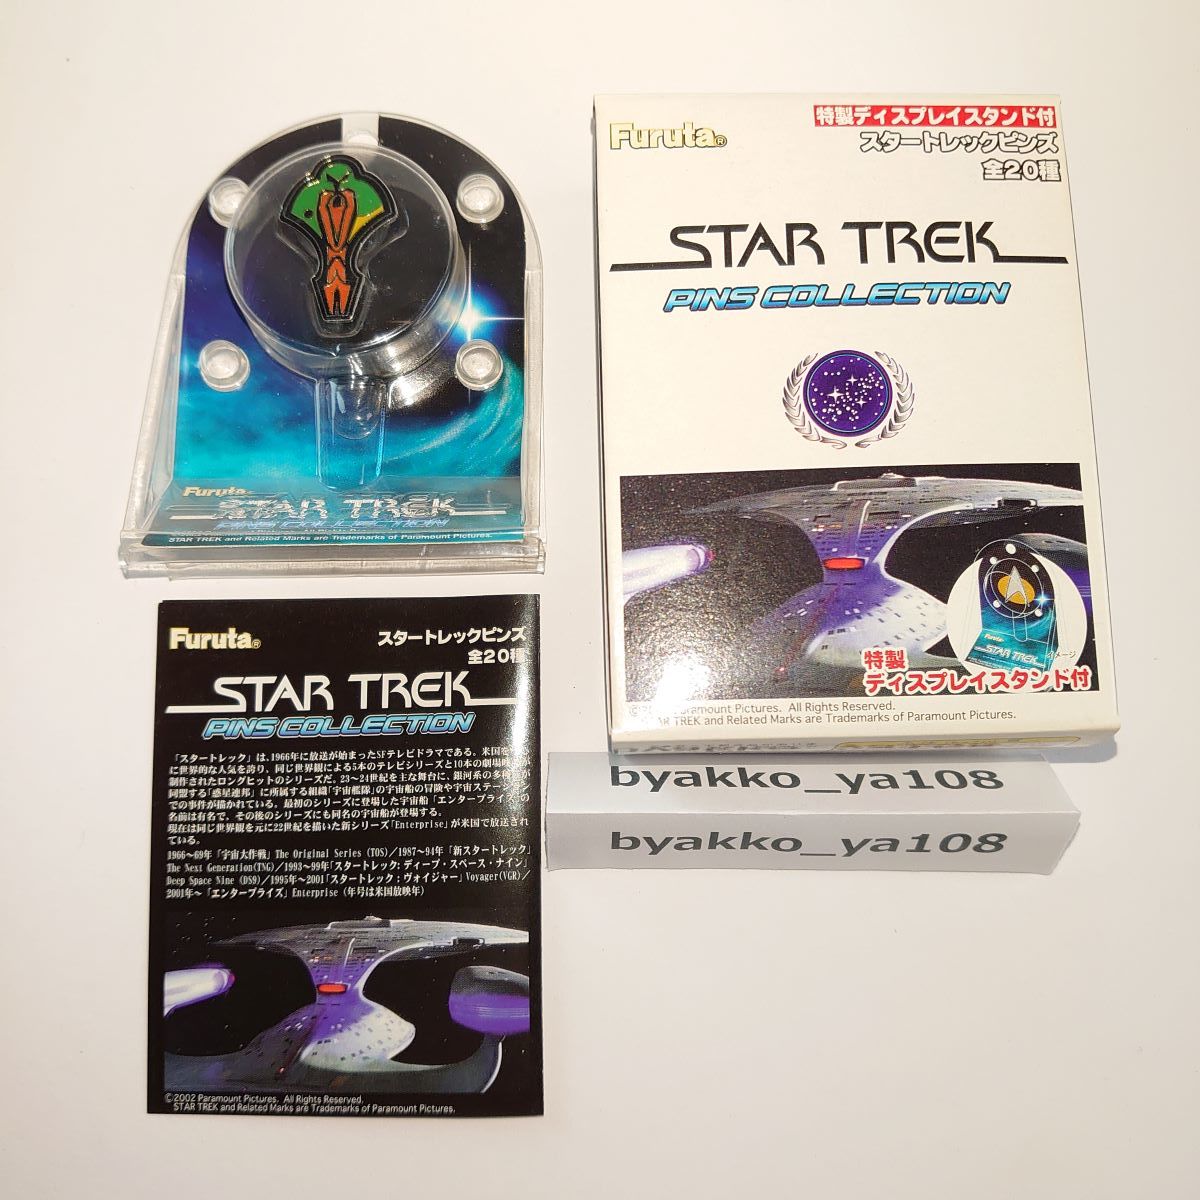  full ta Star Trek pin z collection cardigan siaPins Star Trek